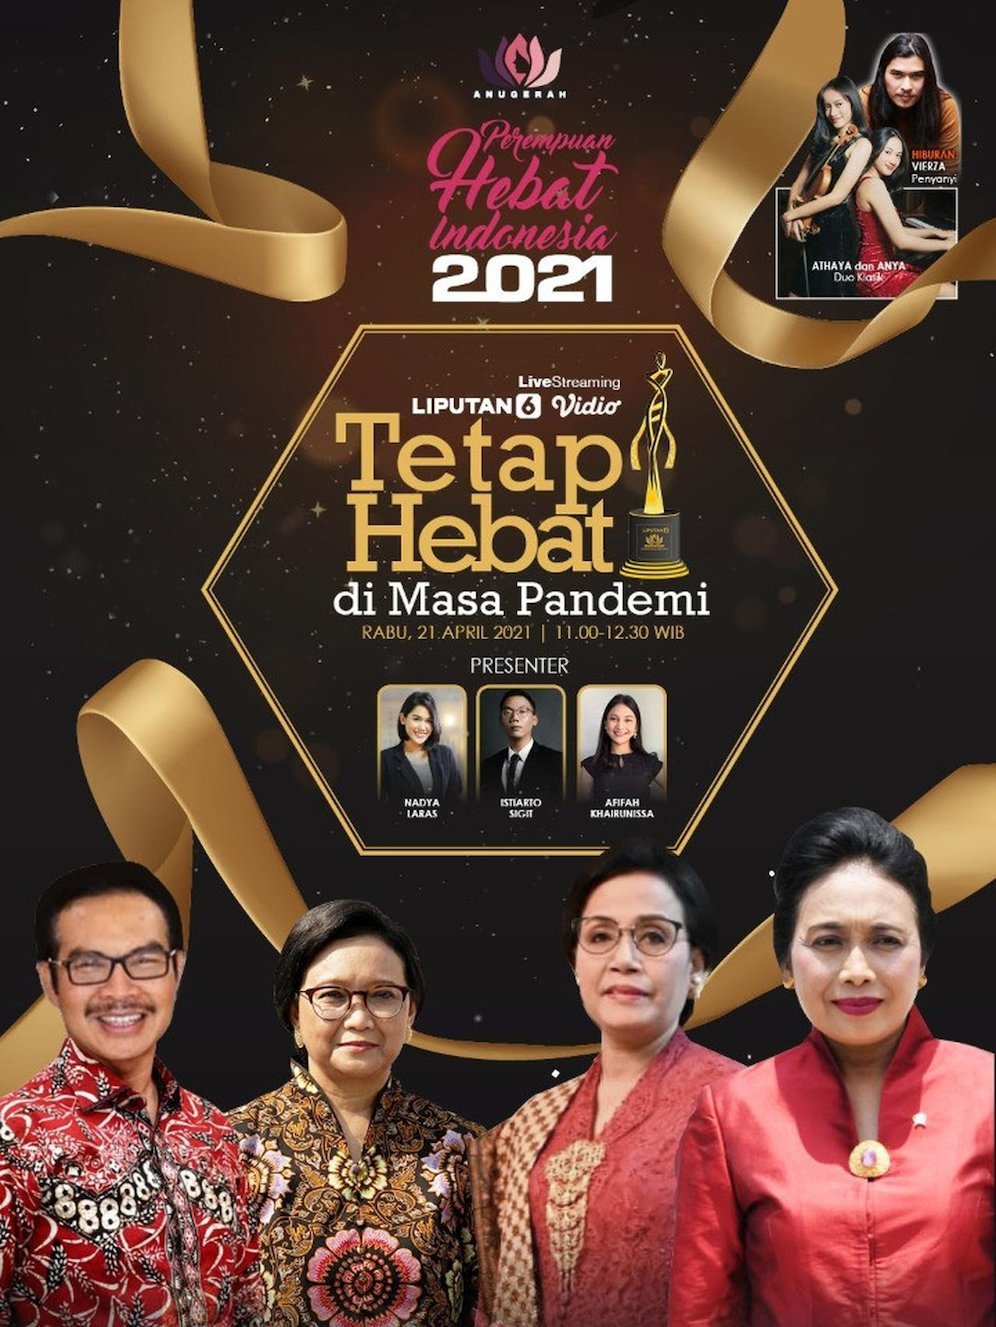 Anugerah Perempuan Hebat Indonesia 2021 (c) KLY